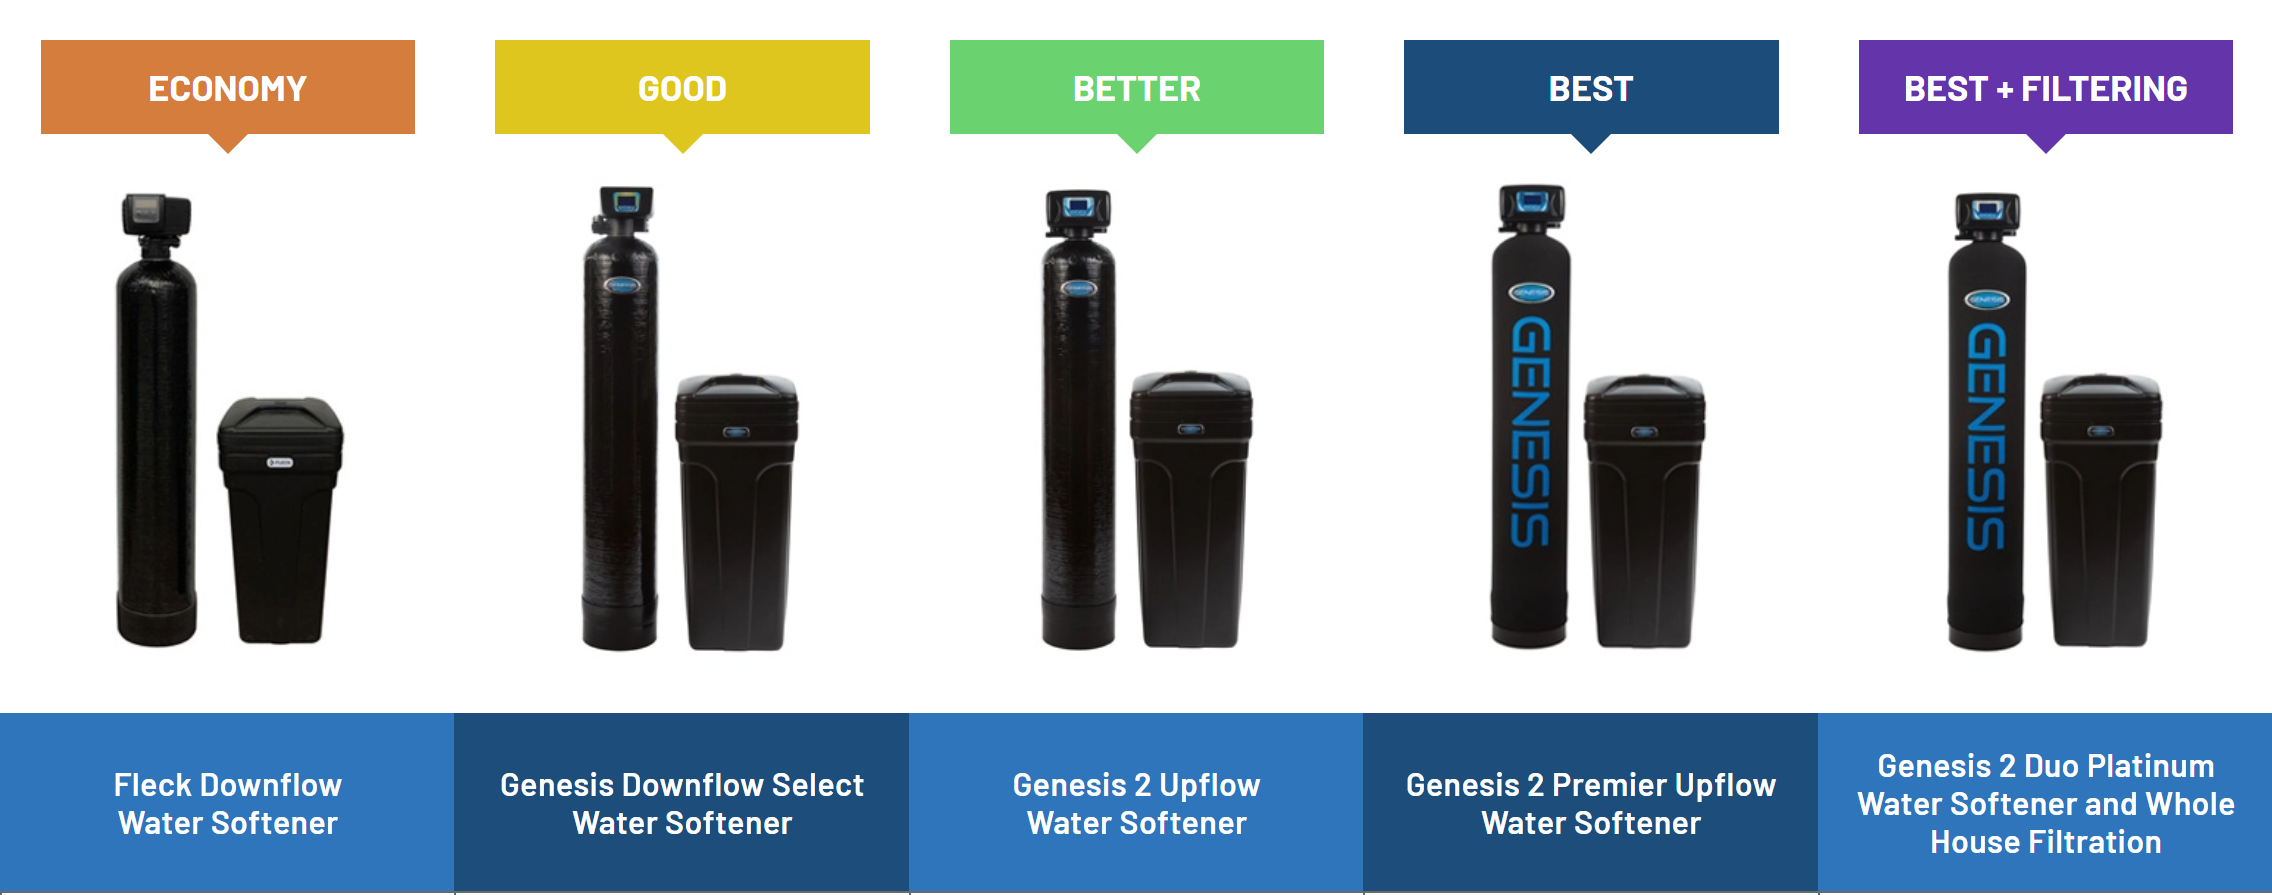 Fleck vs Genesis Water Softener Systems - Water Softener Comparison